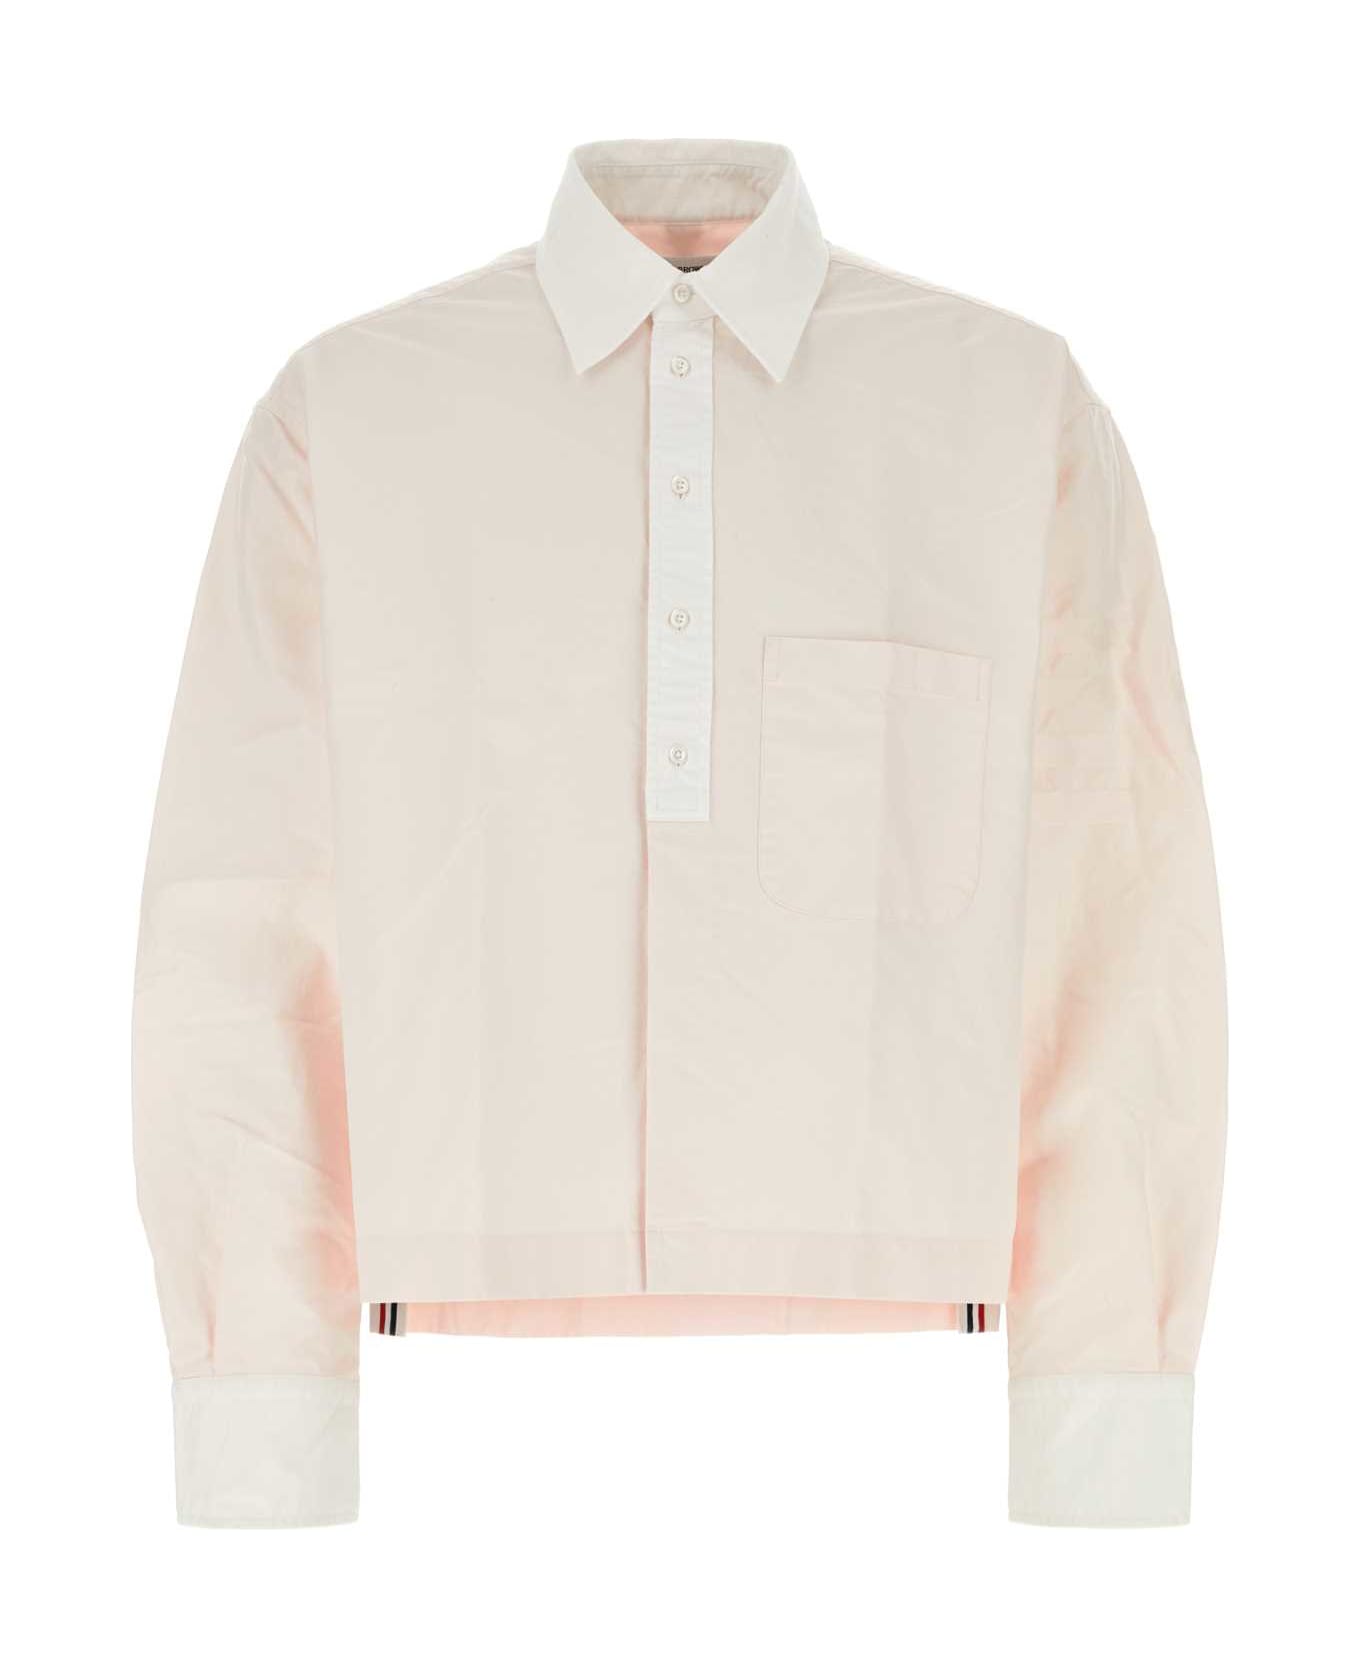 Thom Browne Pastel Pink Oxford Shirt - LTPINK